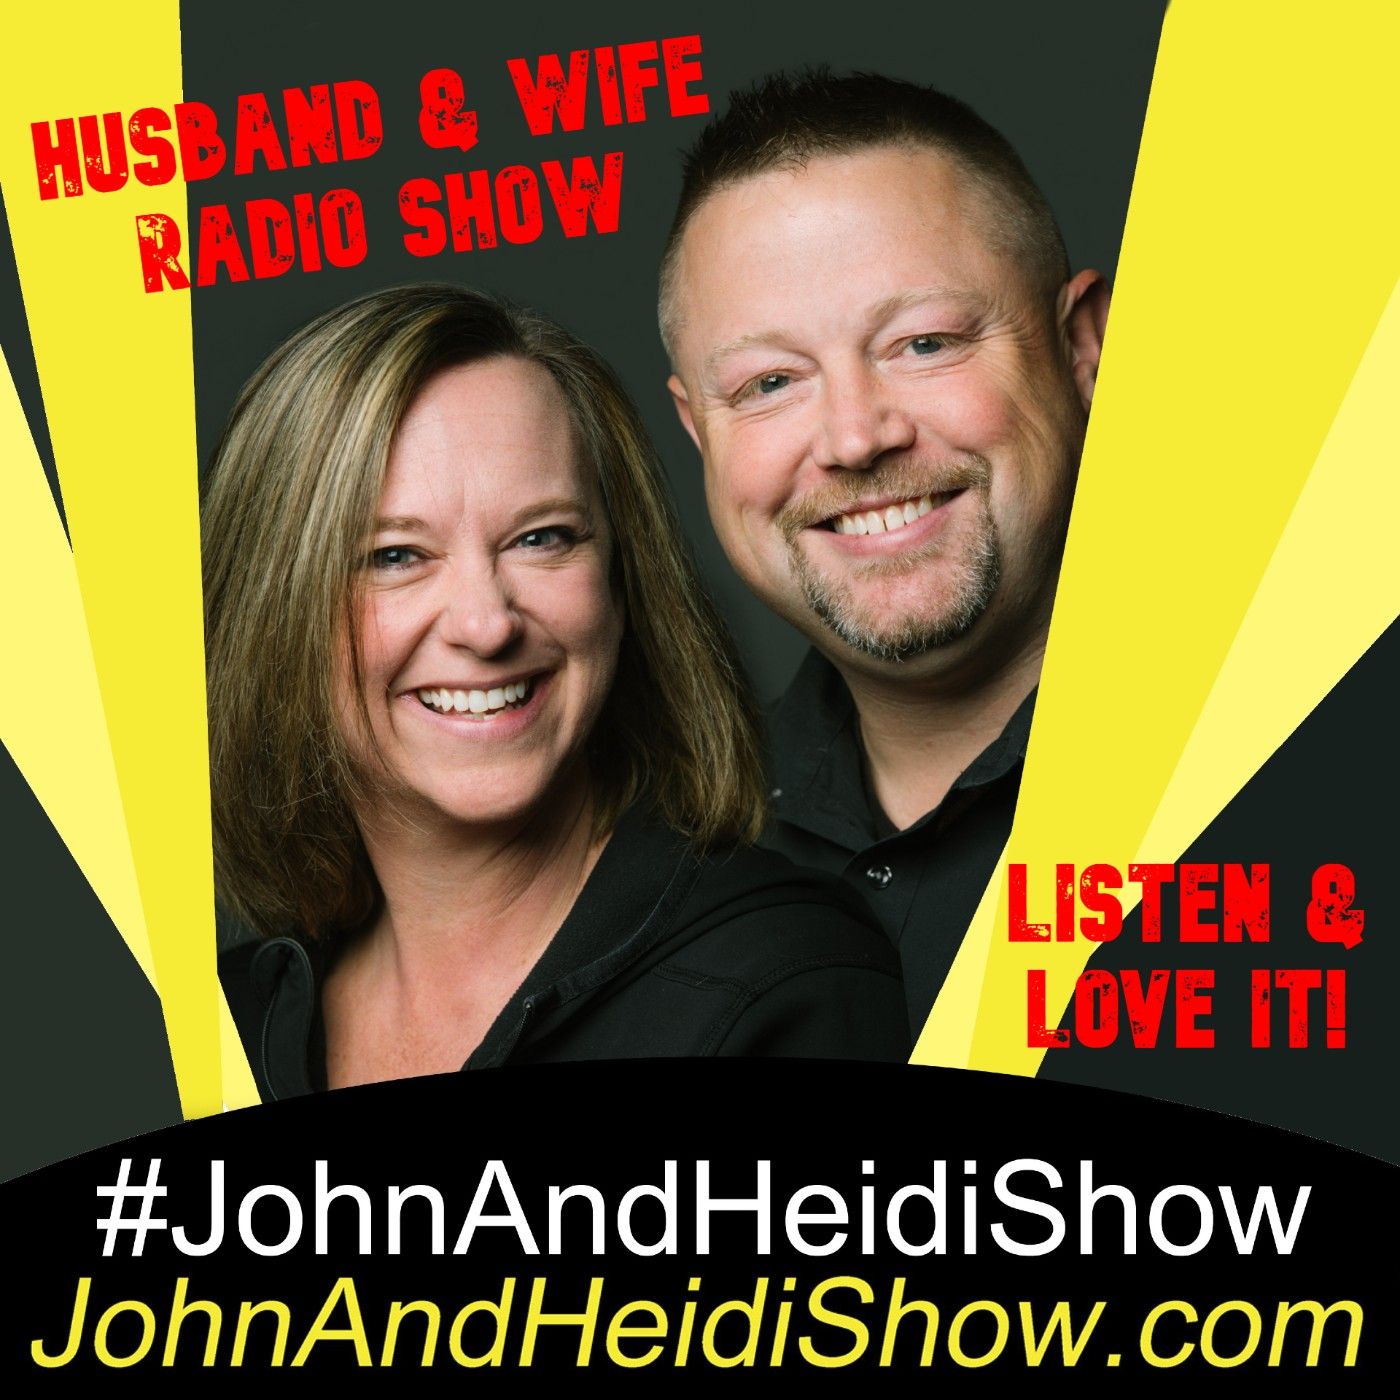 The John & Heidi Show